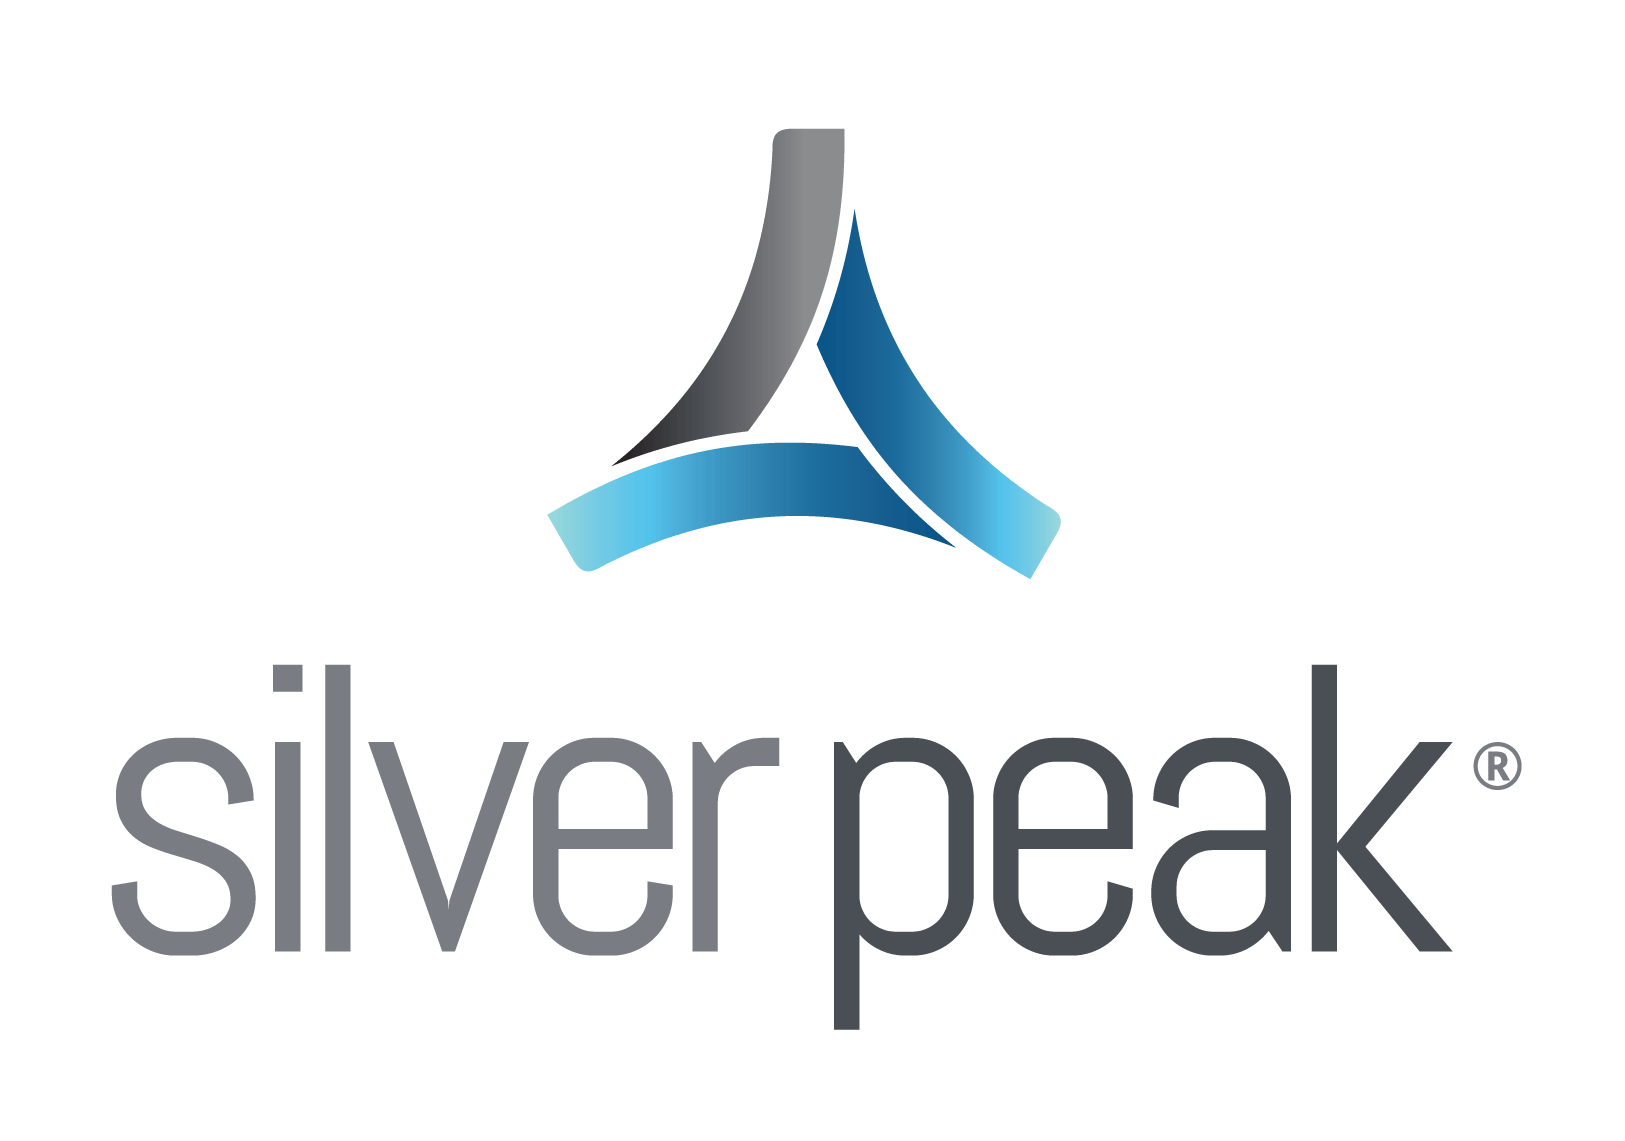 Silver Silver Logo - Media Center | Silver Peak